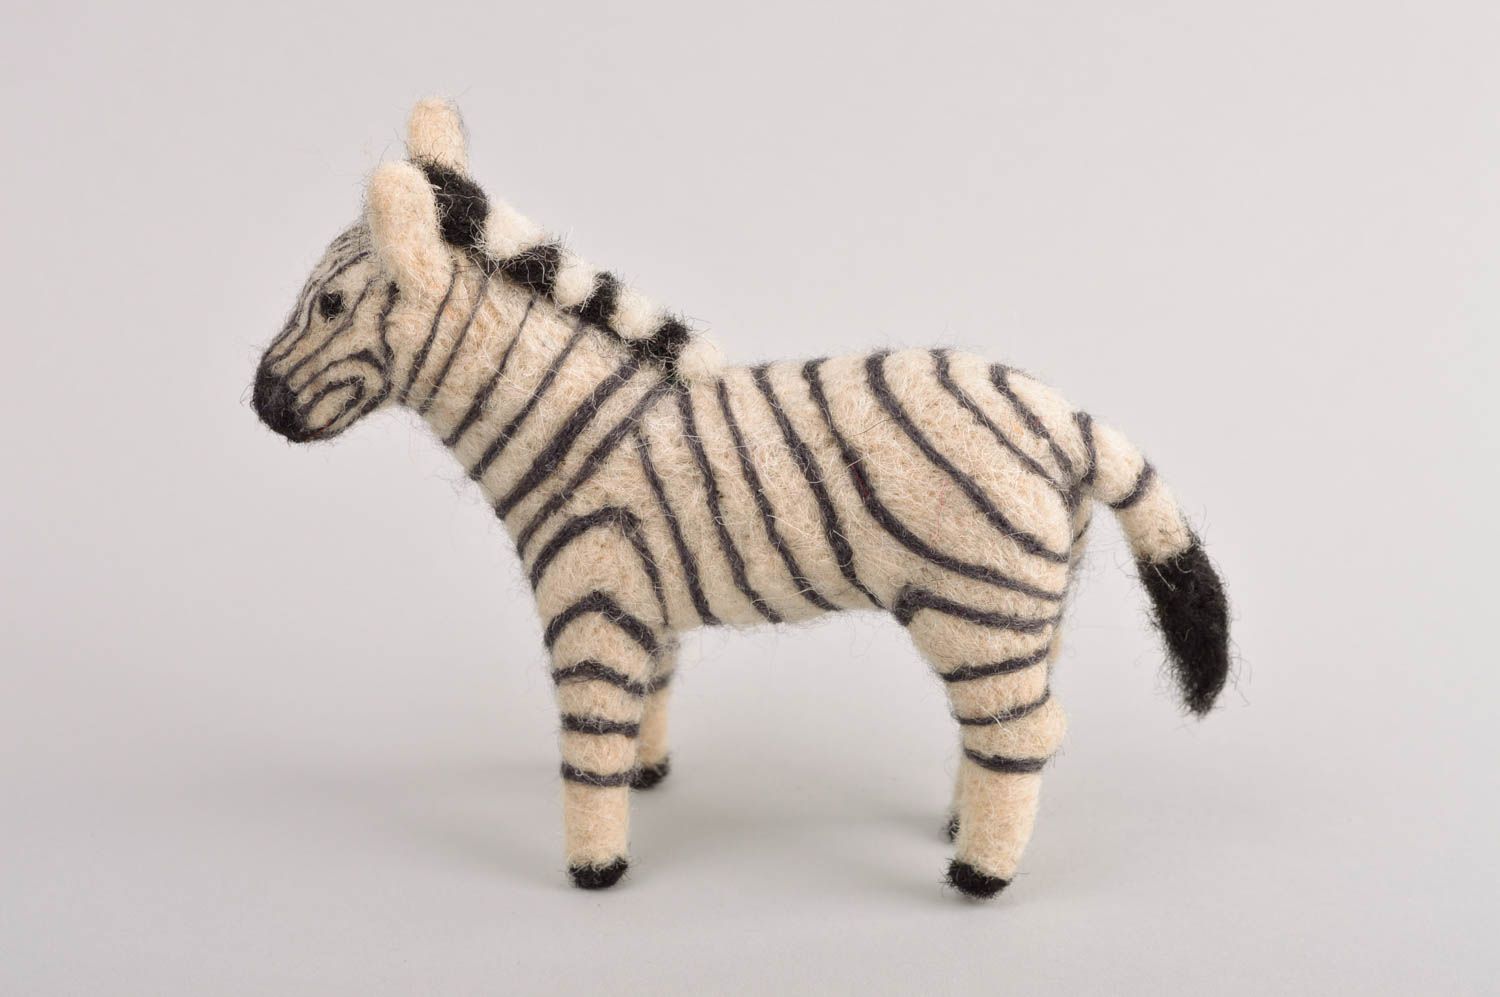 Handmade toy designer toy for baby nursery decor ideas woolen animal toy photo 3